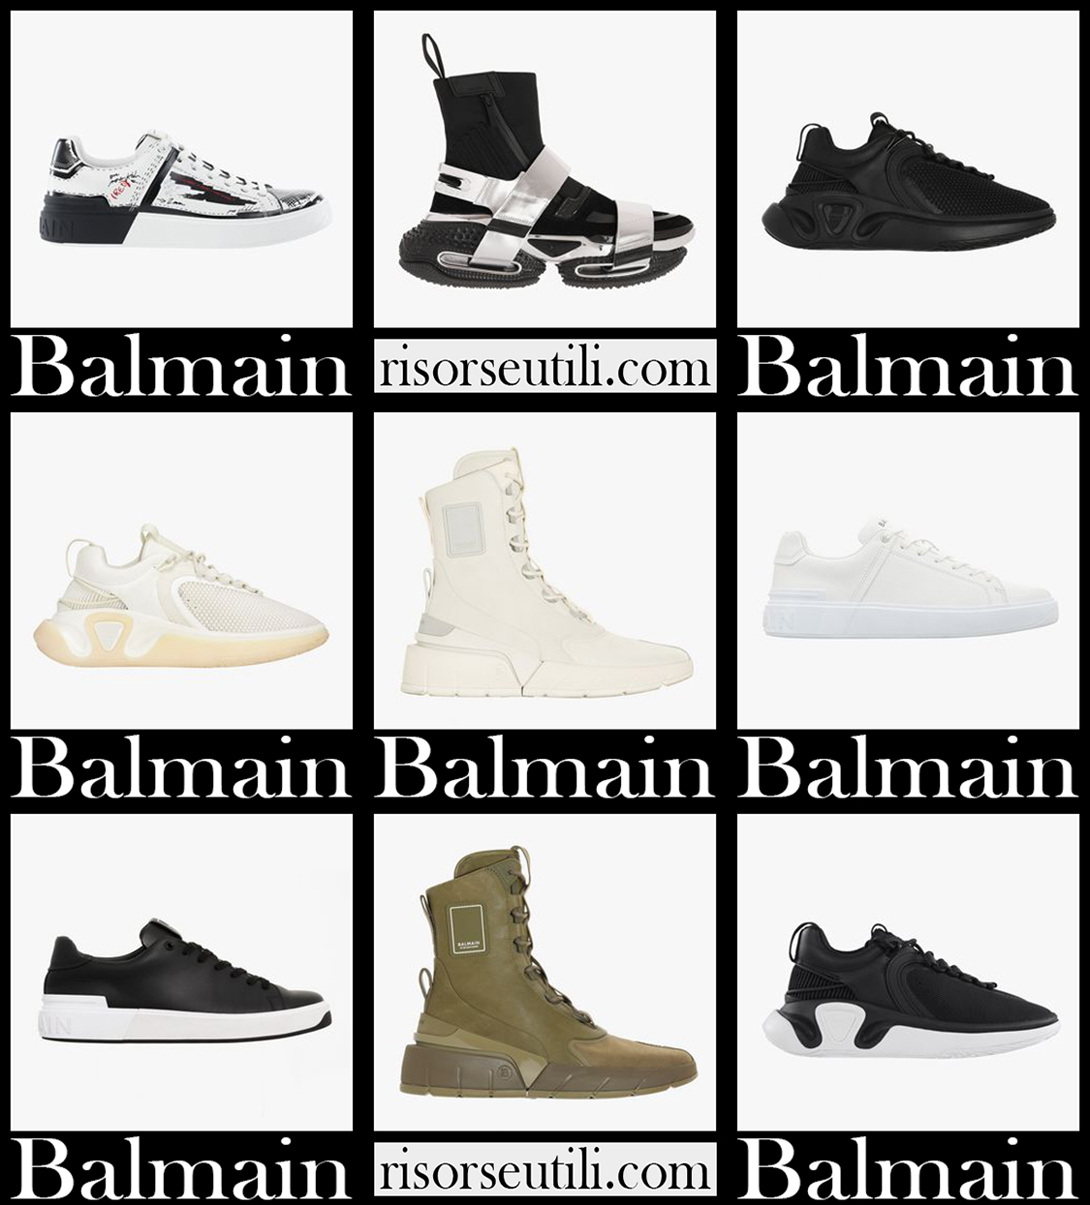 New arrivals Balmain sneakers 2021 mens shoes